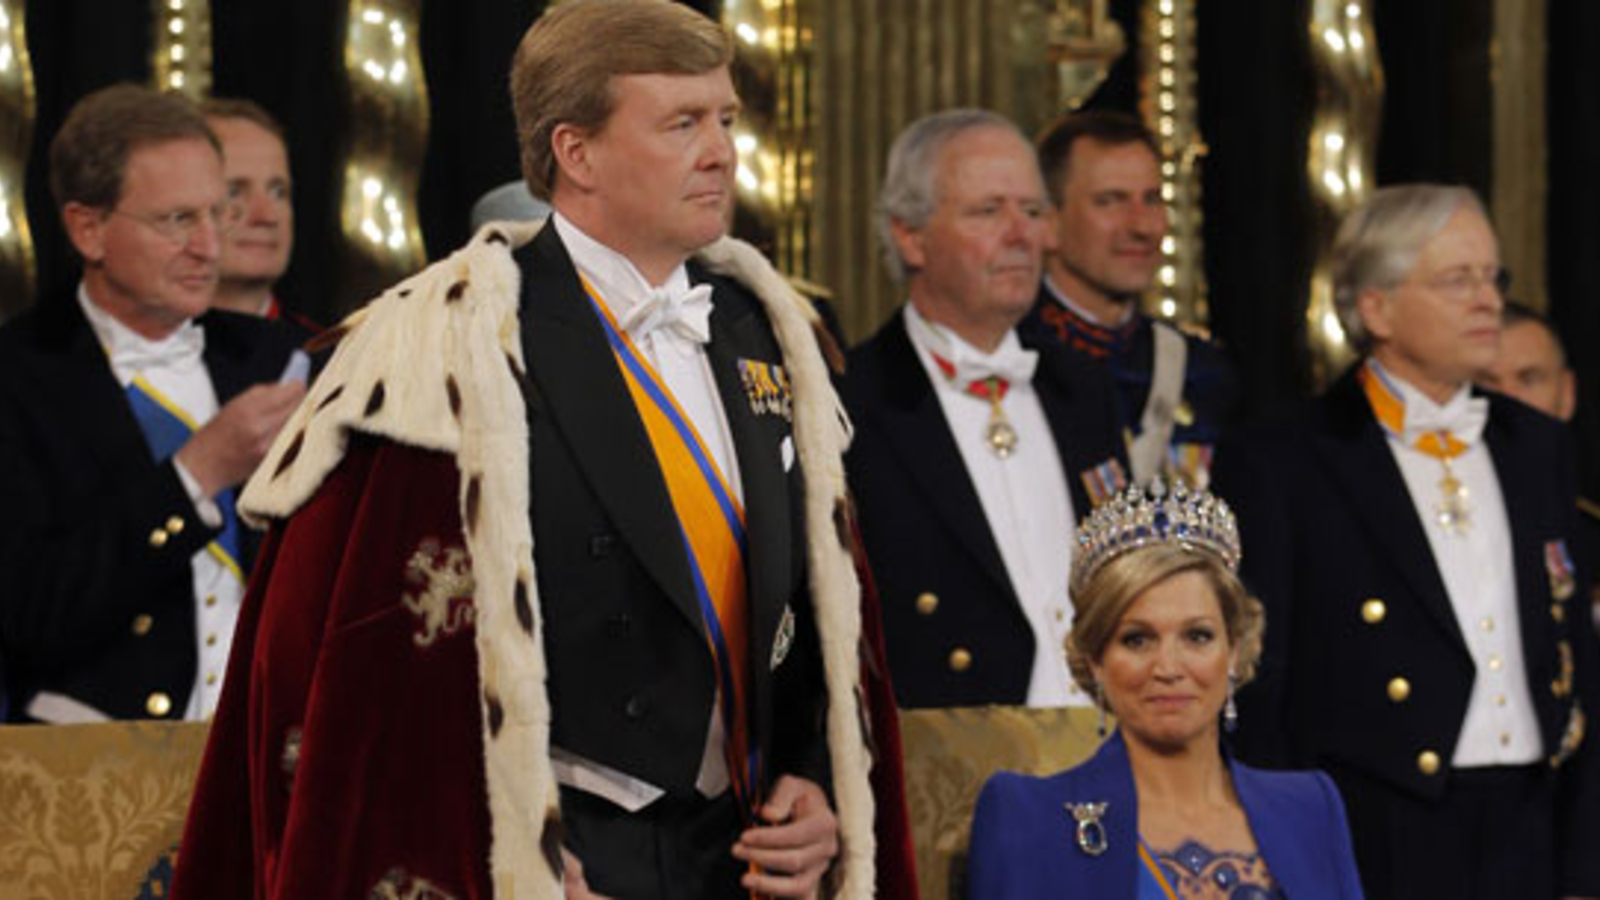 Willem Alexander als König vereidigt oe at